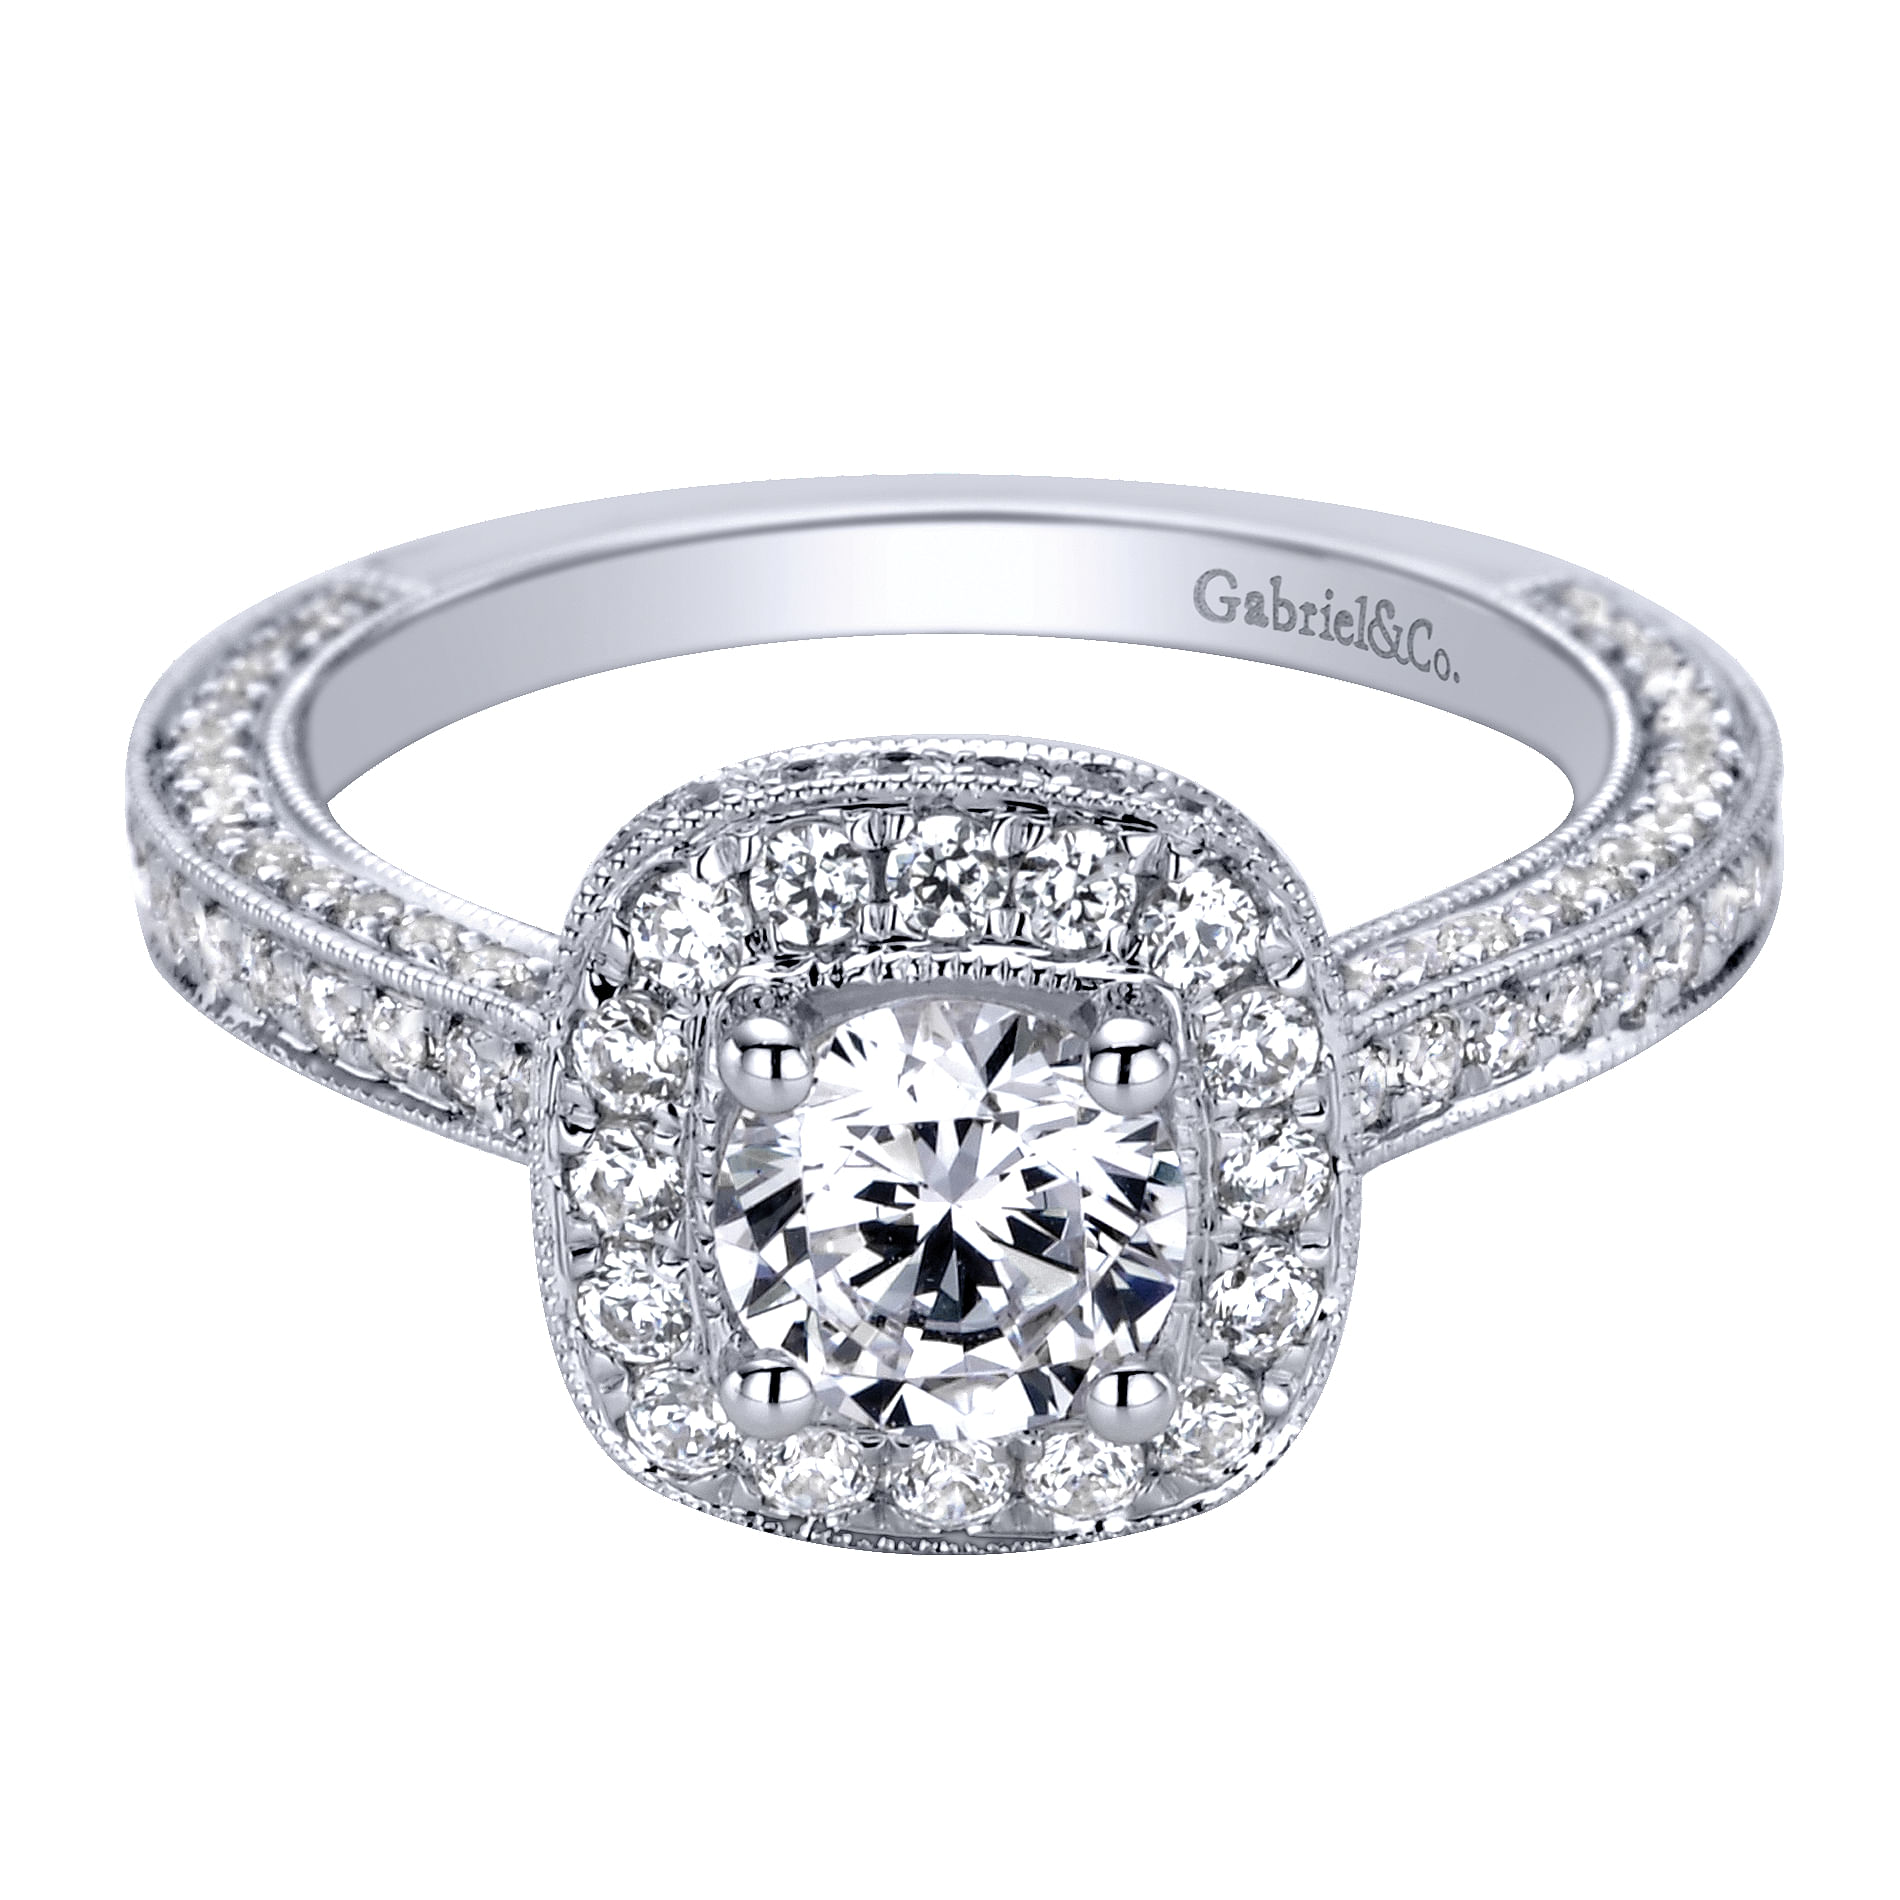 Vintage Inspired 14K White Gold Halo Diamond Engagement Ring